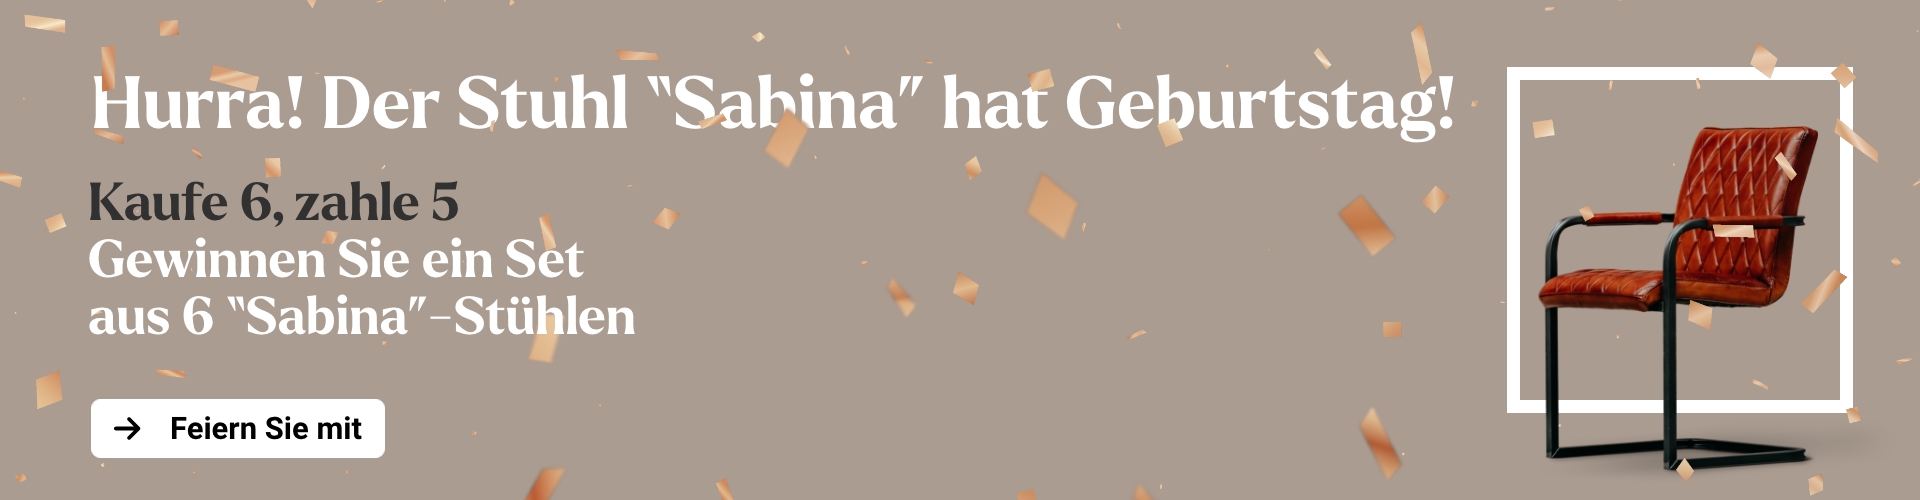 Sabina hat Geburtstag!